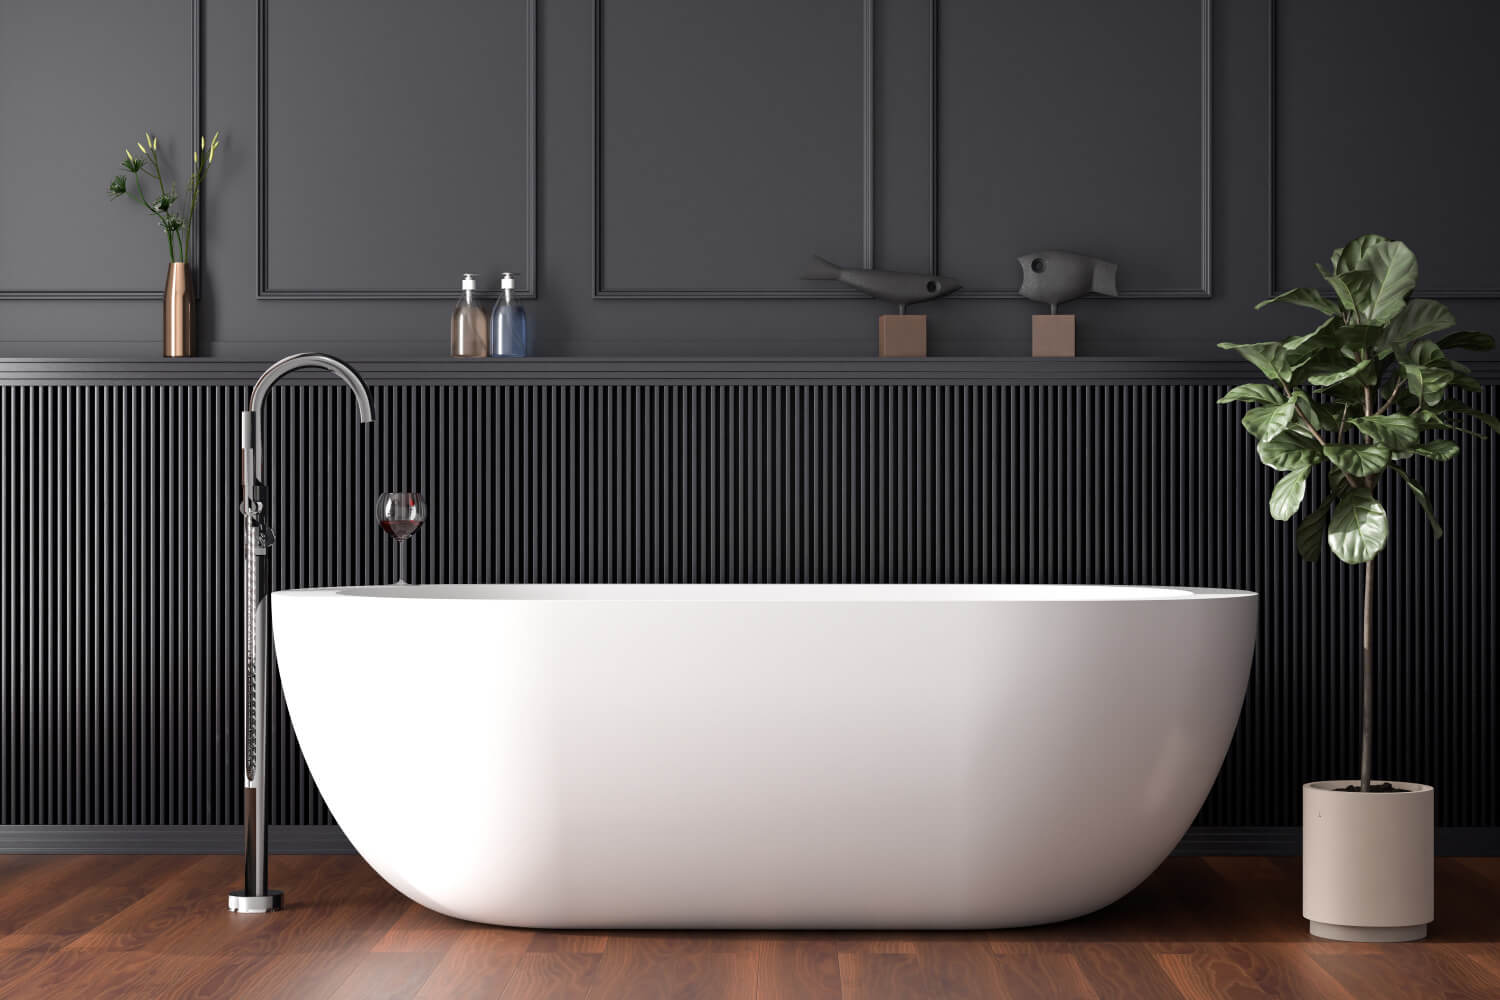 Are Freestanding Baths a Good Idea